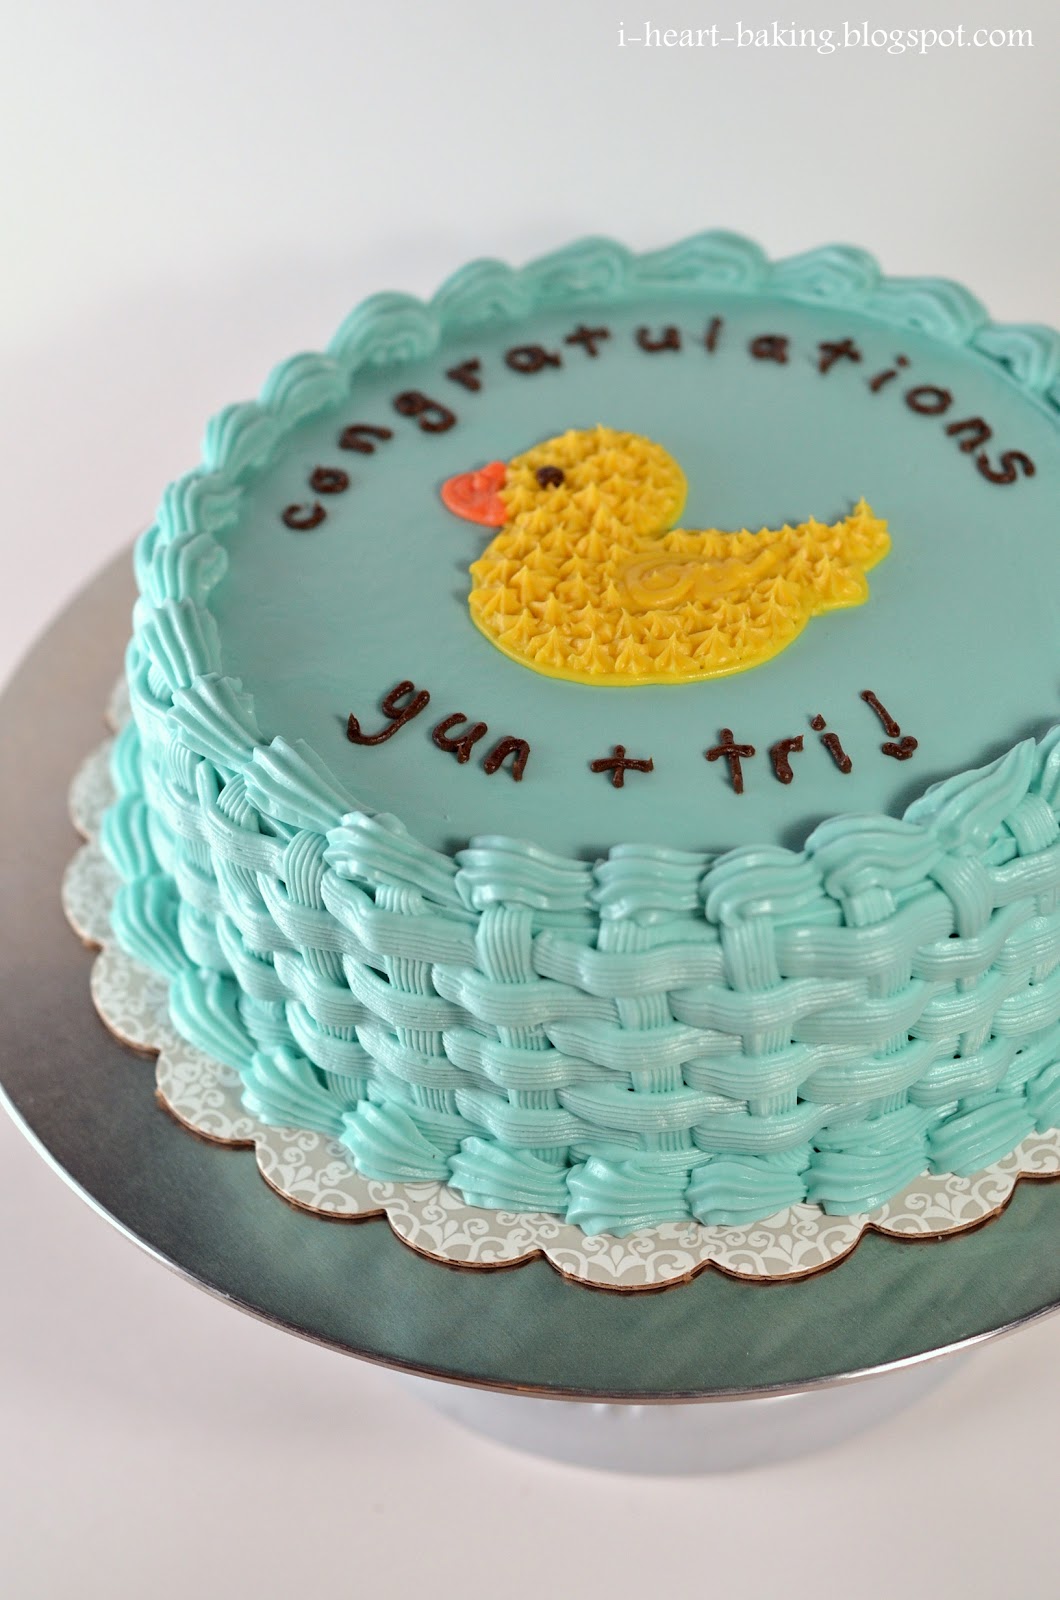 DIY basketweave cake with duckies (via i-heart-baking.blogspot.ru)